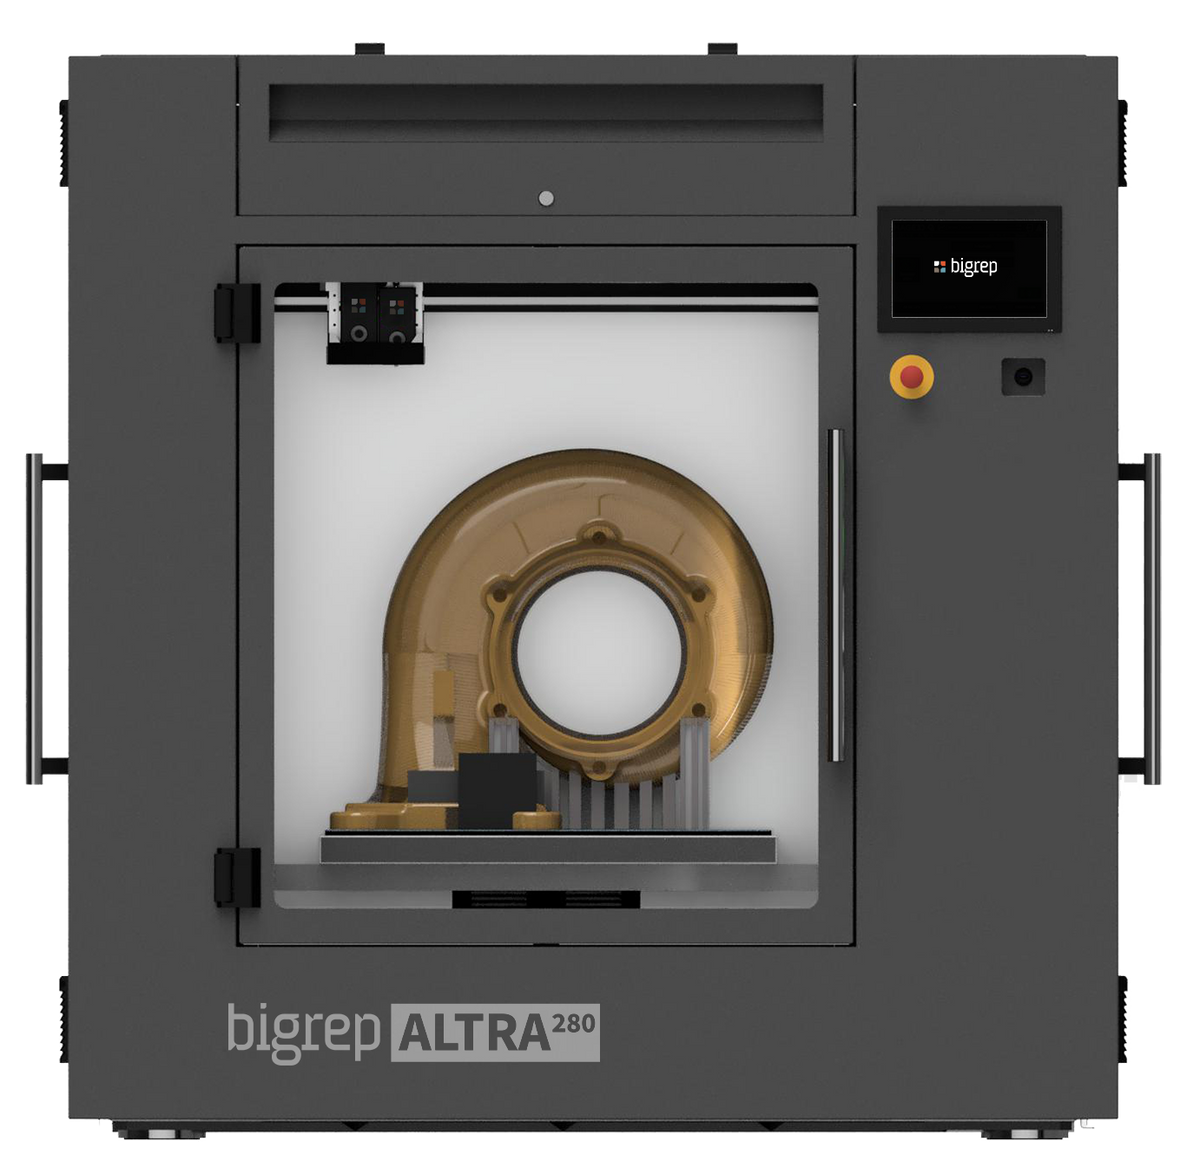 BigRep ALTRA 280 3D printer with part